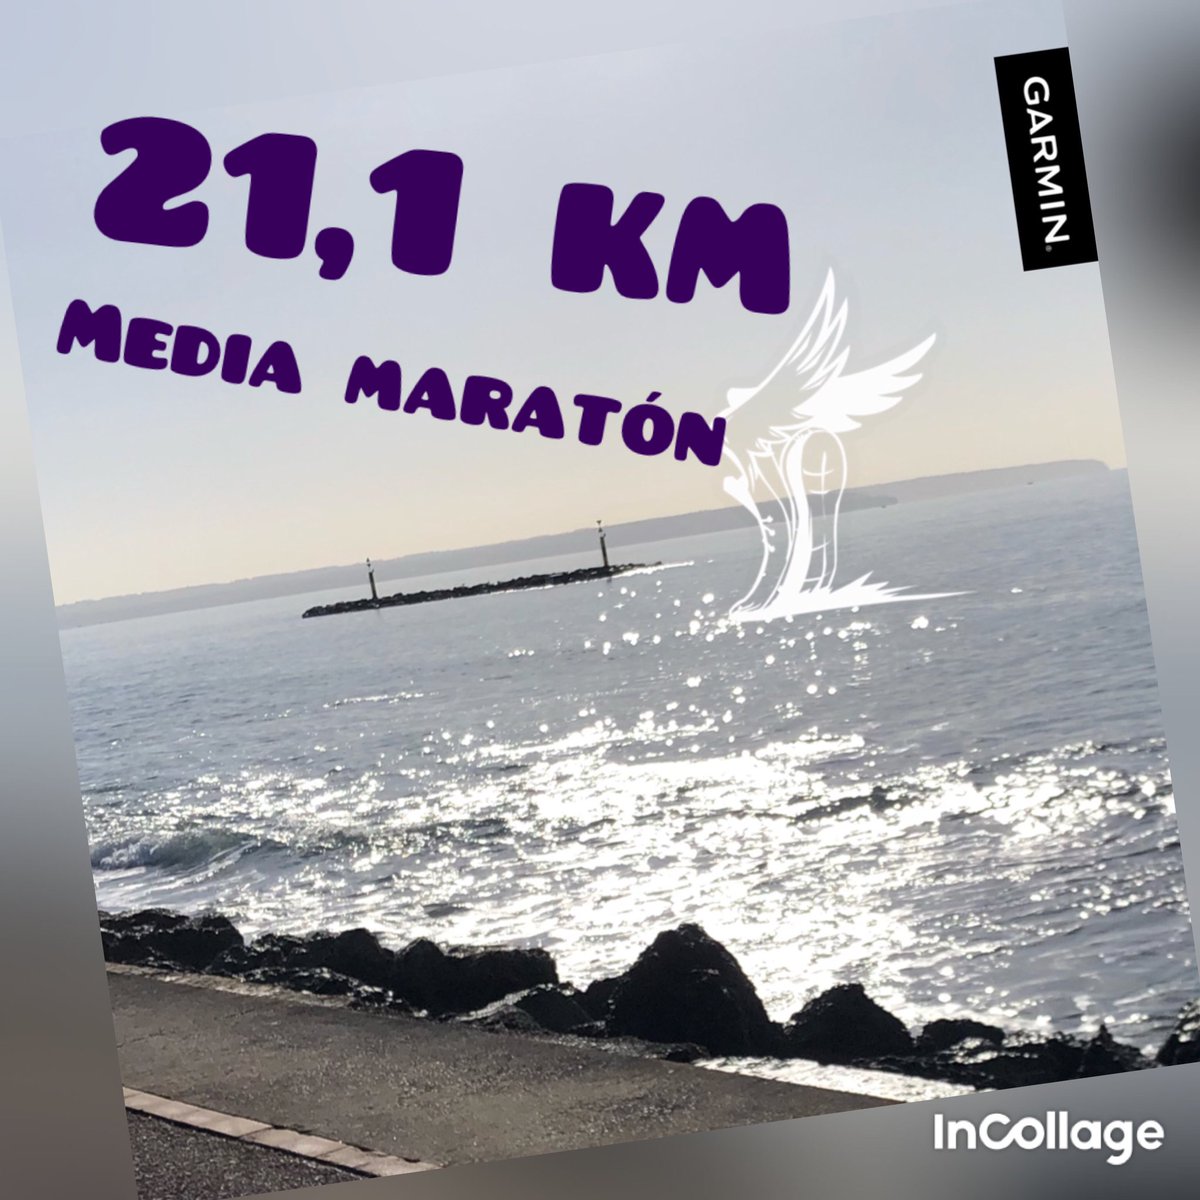 Primer deseo del año cumplido #mediamaratón #running @GironVicsGiron